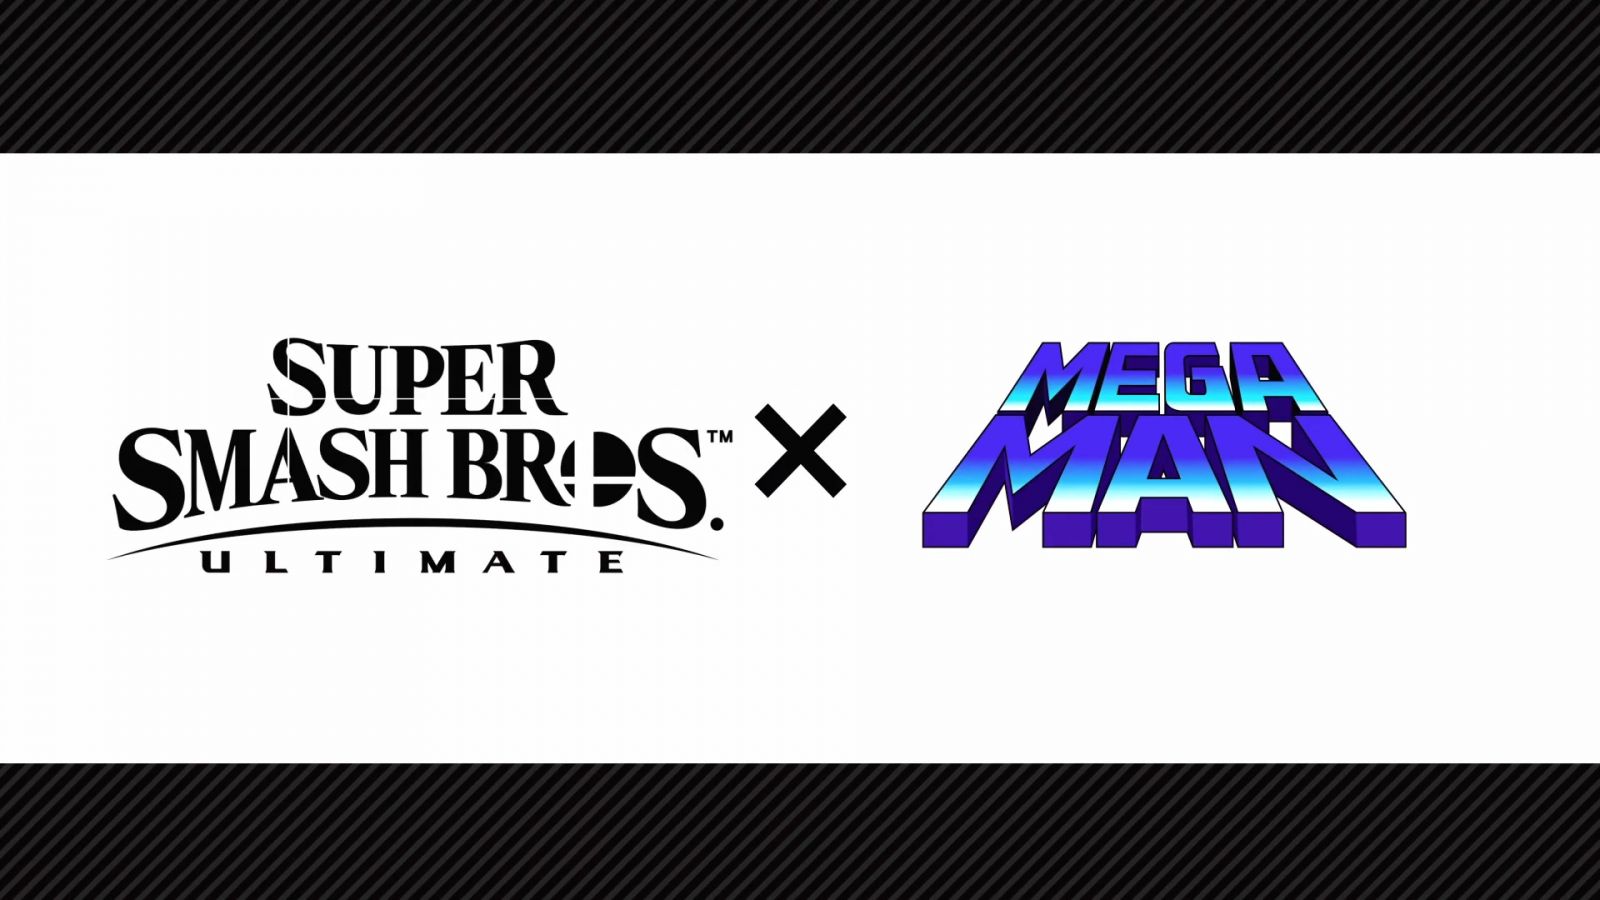 Super Smash Bros. Ultimate - Mii Fighter Costumes #3 - Nintendo Switch_20190908_121022.044.jpg